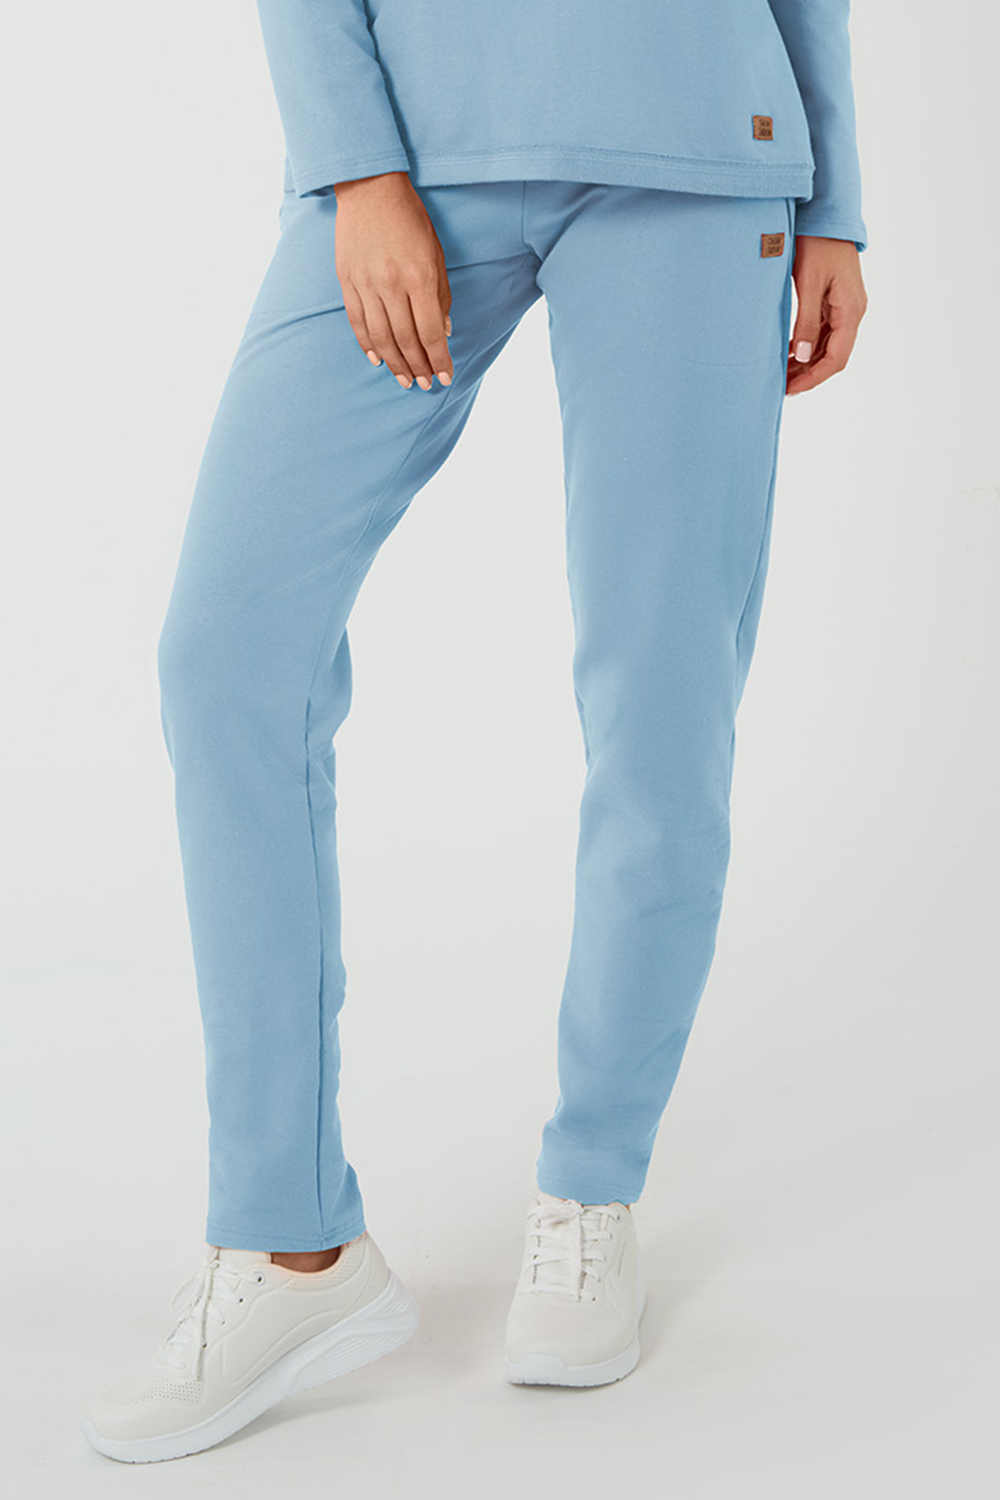 Italian Fashion Stella d. sp. Spodnie dres, niebieski